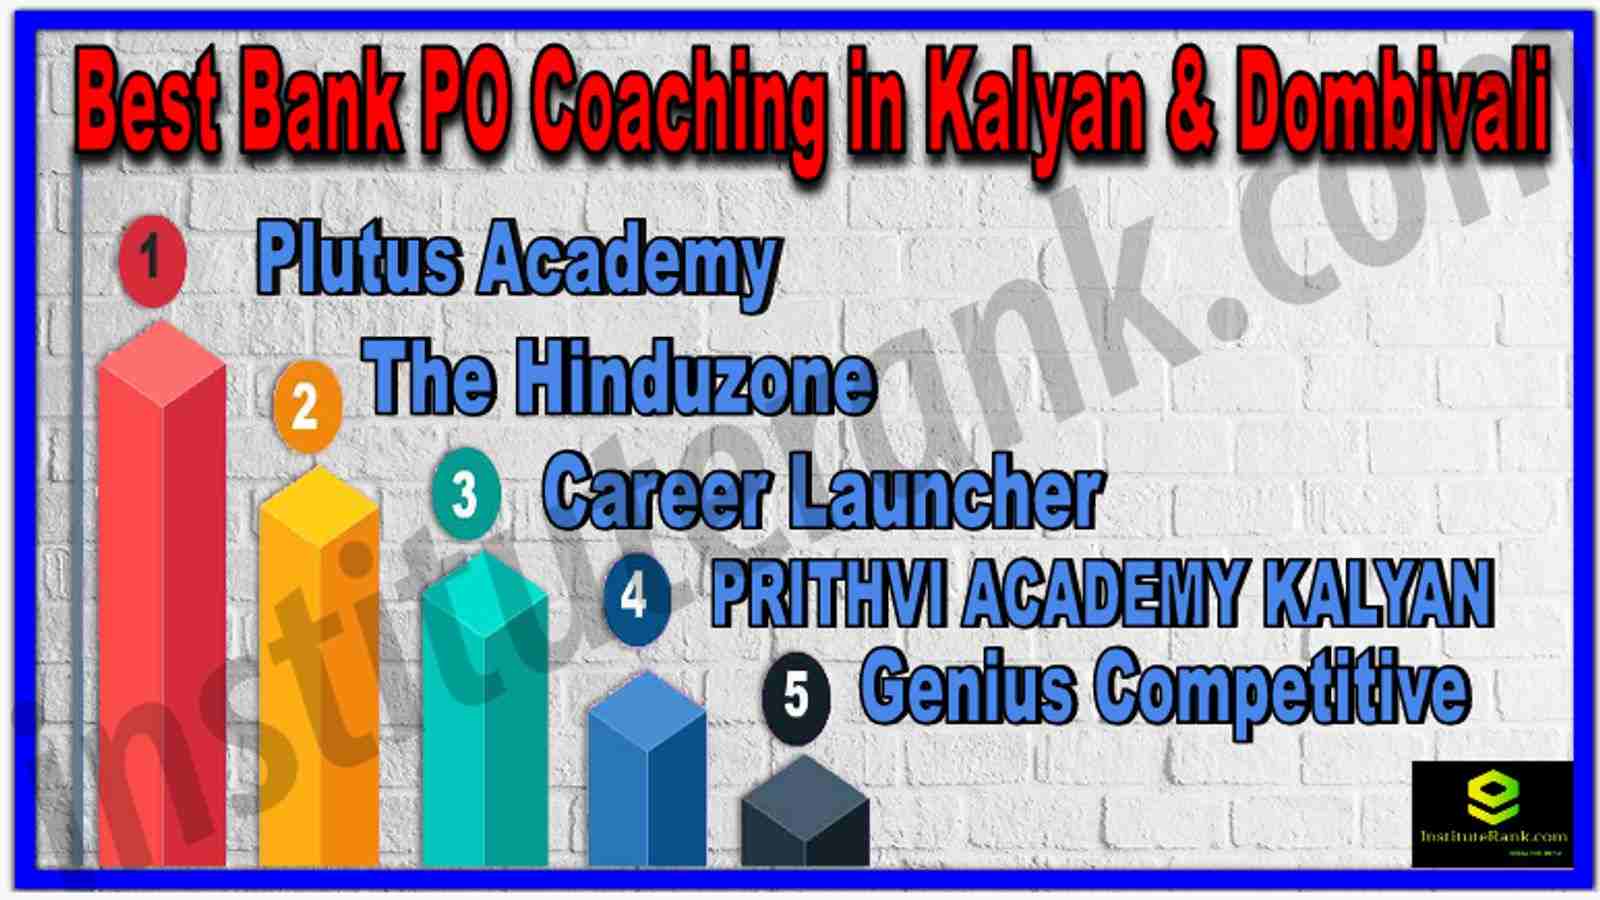 Best Bank PO Coaching in Kalyan & Dombivali